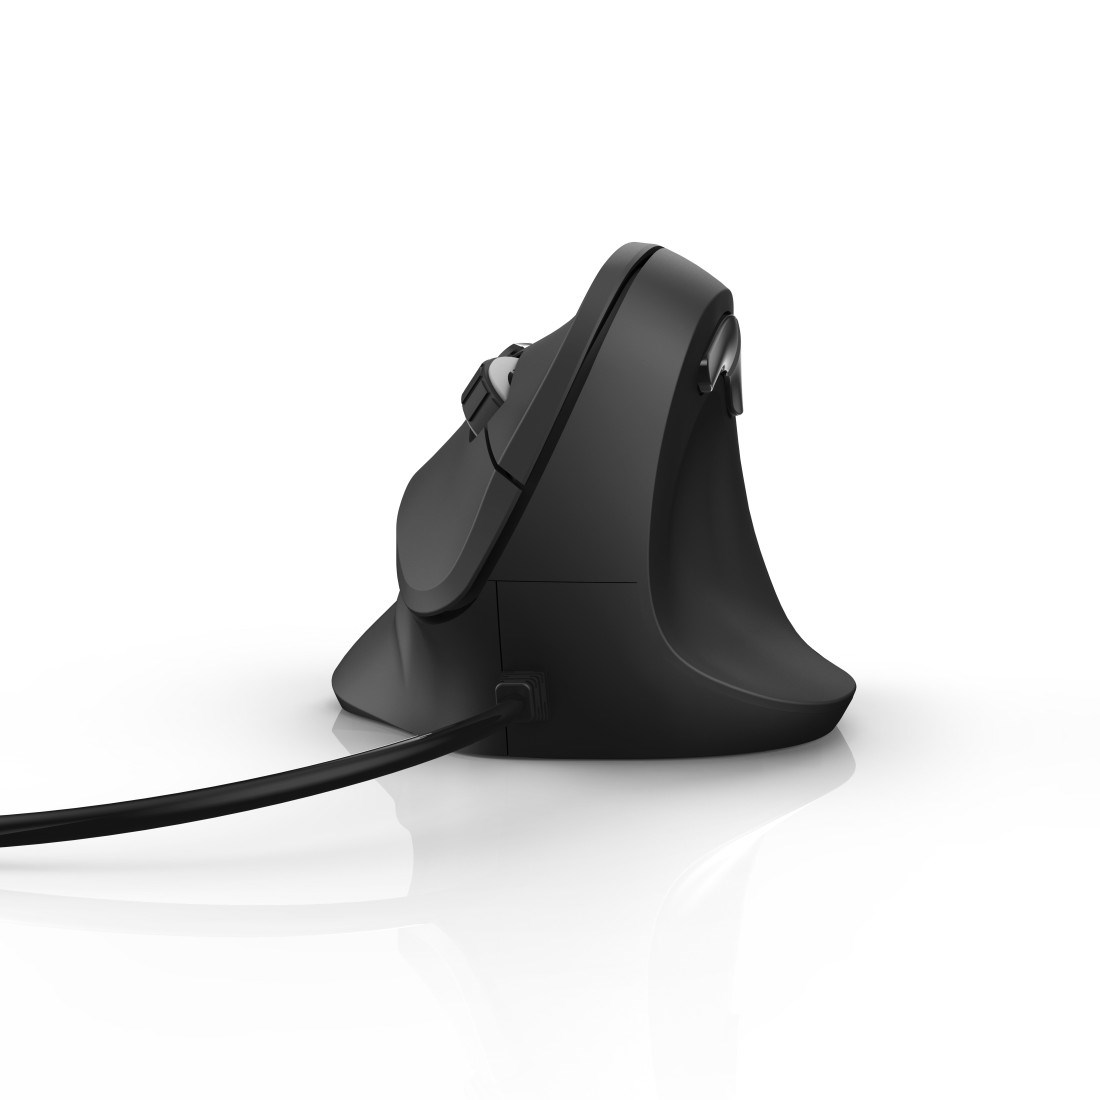 Vertikálna ergonomická drôtová myš Hama EMC-500,  6 tlačidiel,  čierna5 